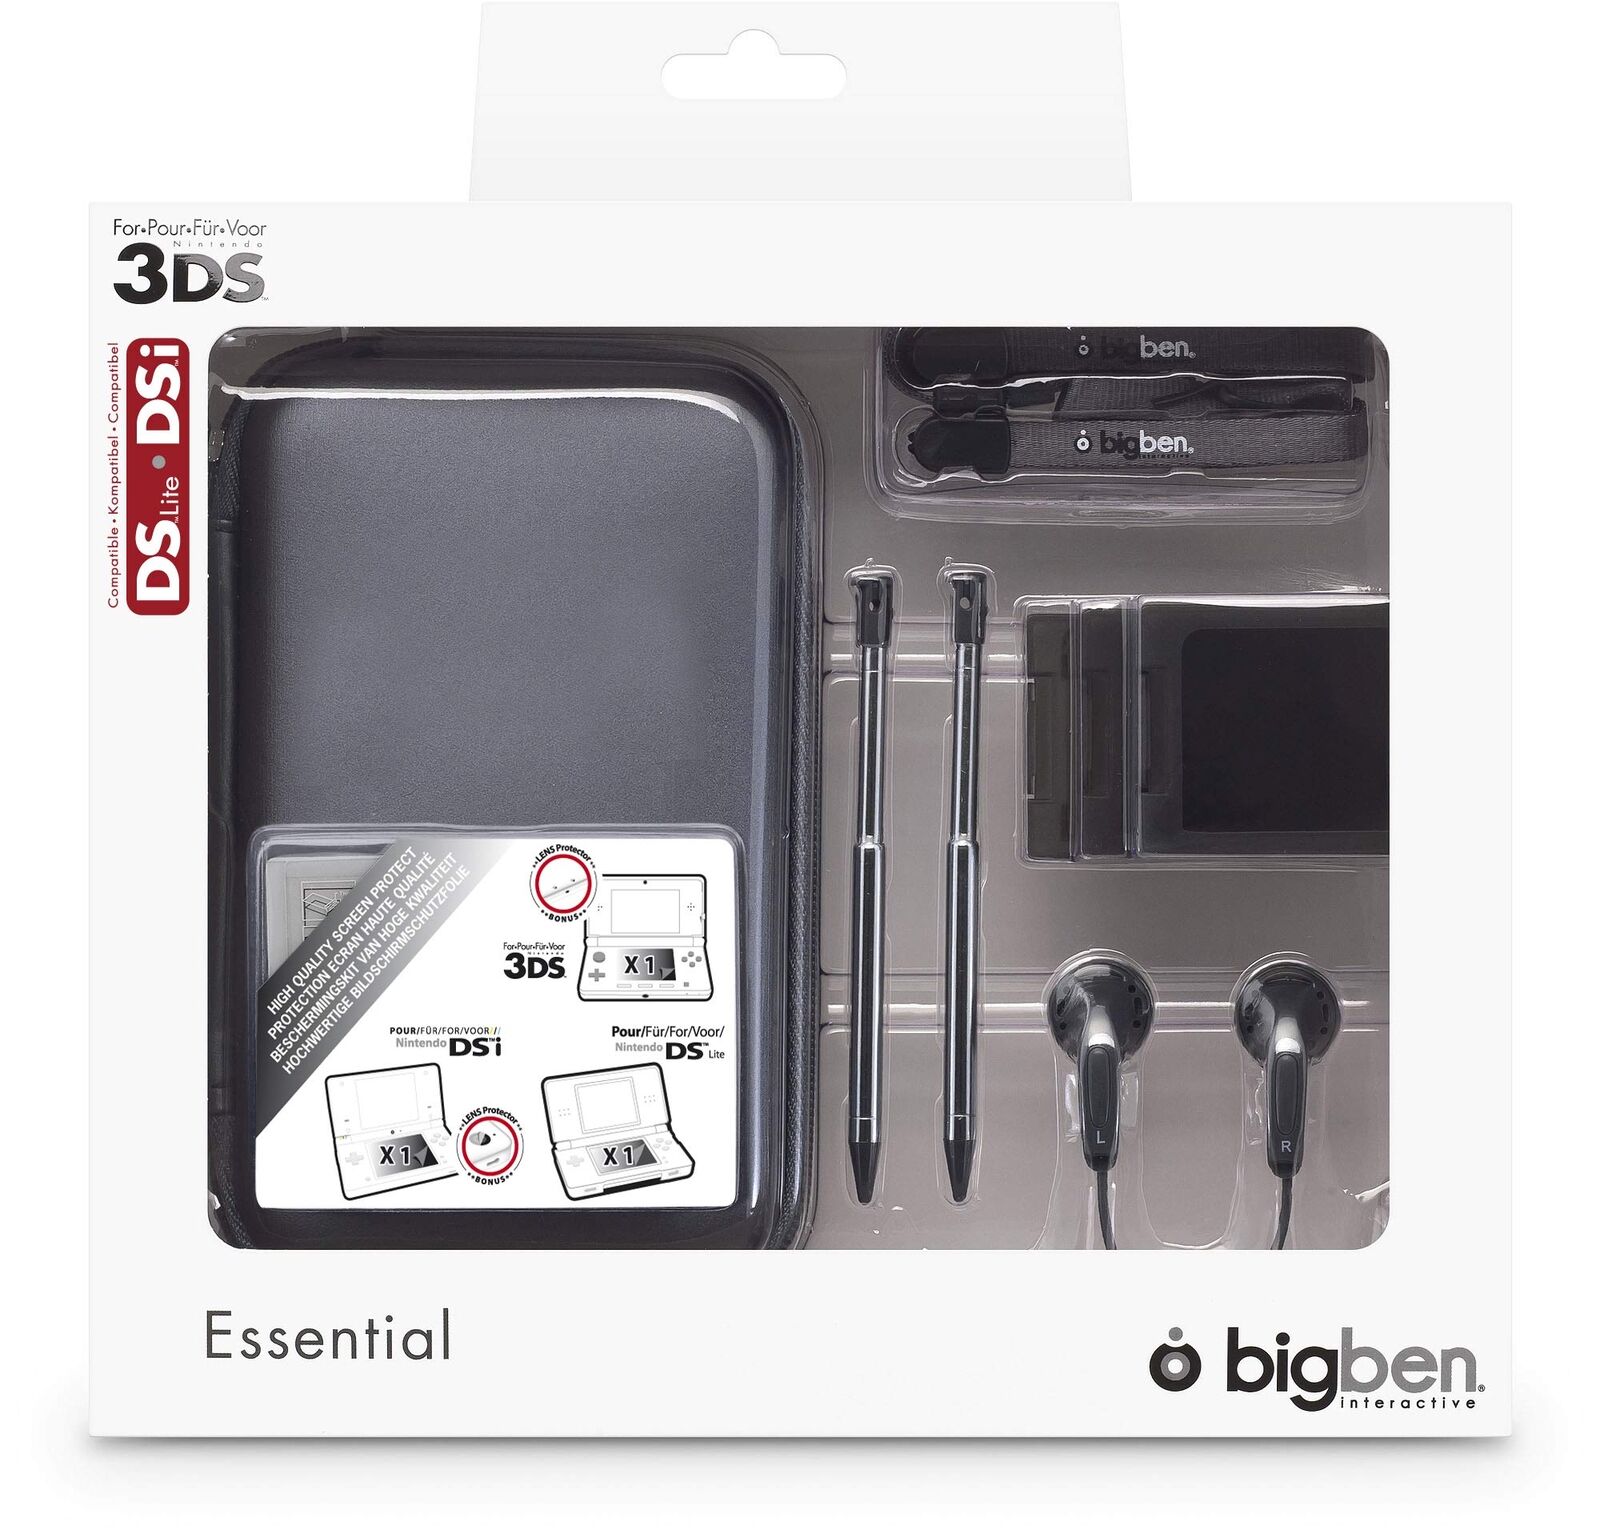 Nintendo 3DS / DS Lite/ DSi Essential Pack - κάλυμμα, ακουστικά, γραφίδα, λουράκι κ.λπ. - ΓΚΡΙ